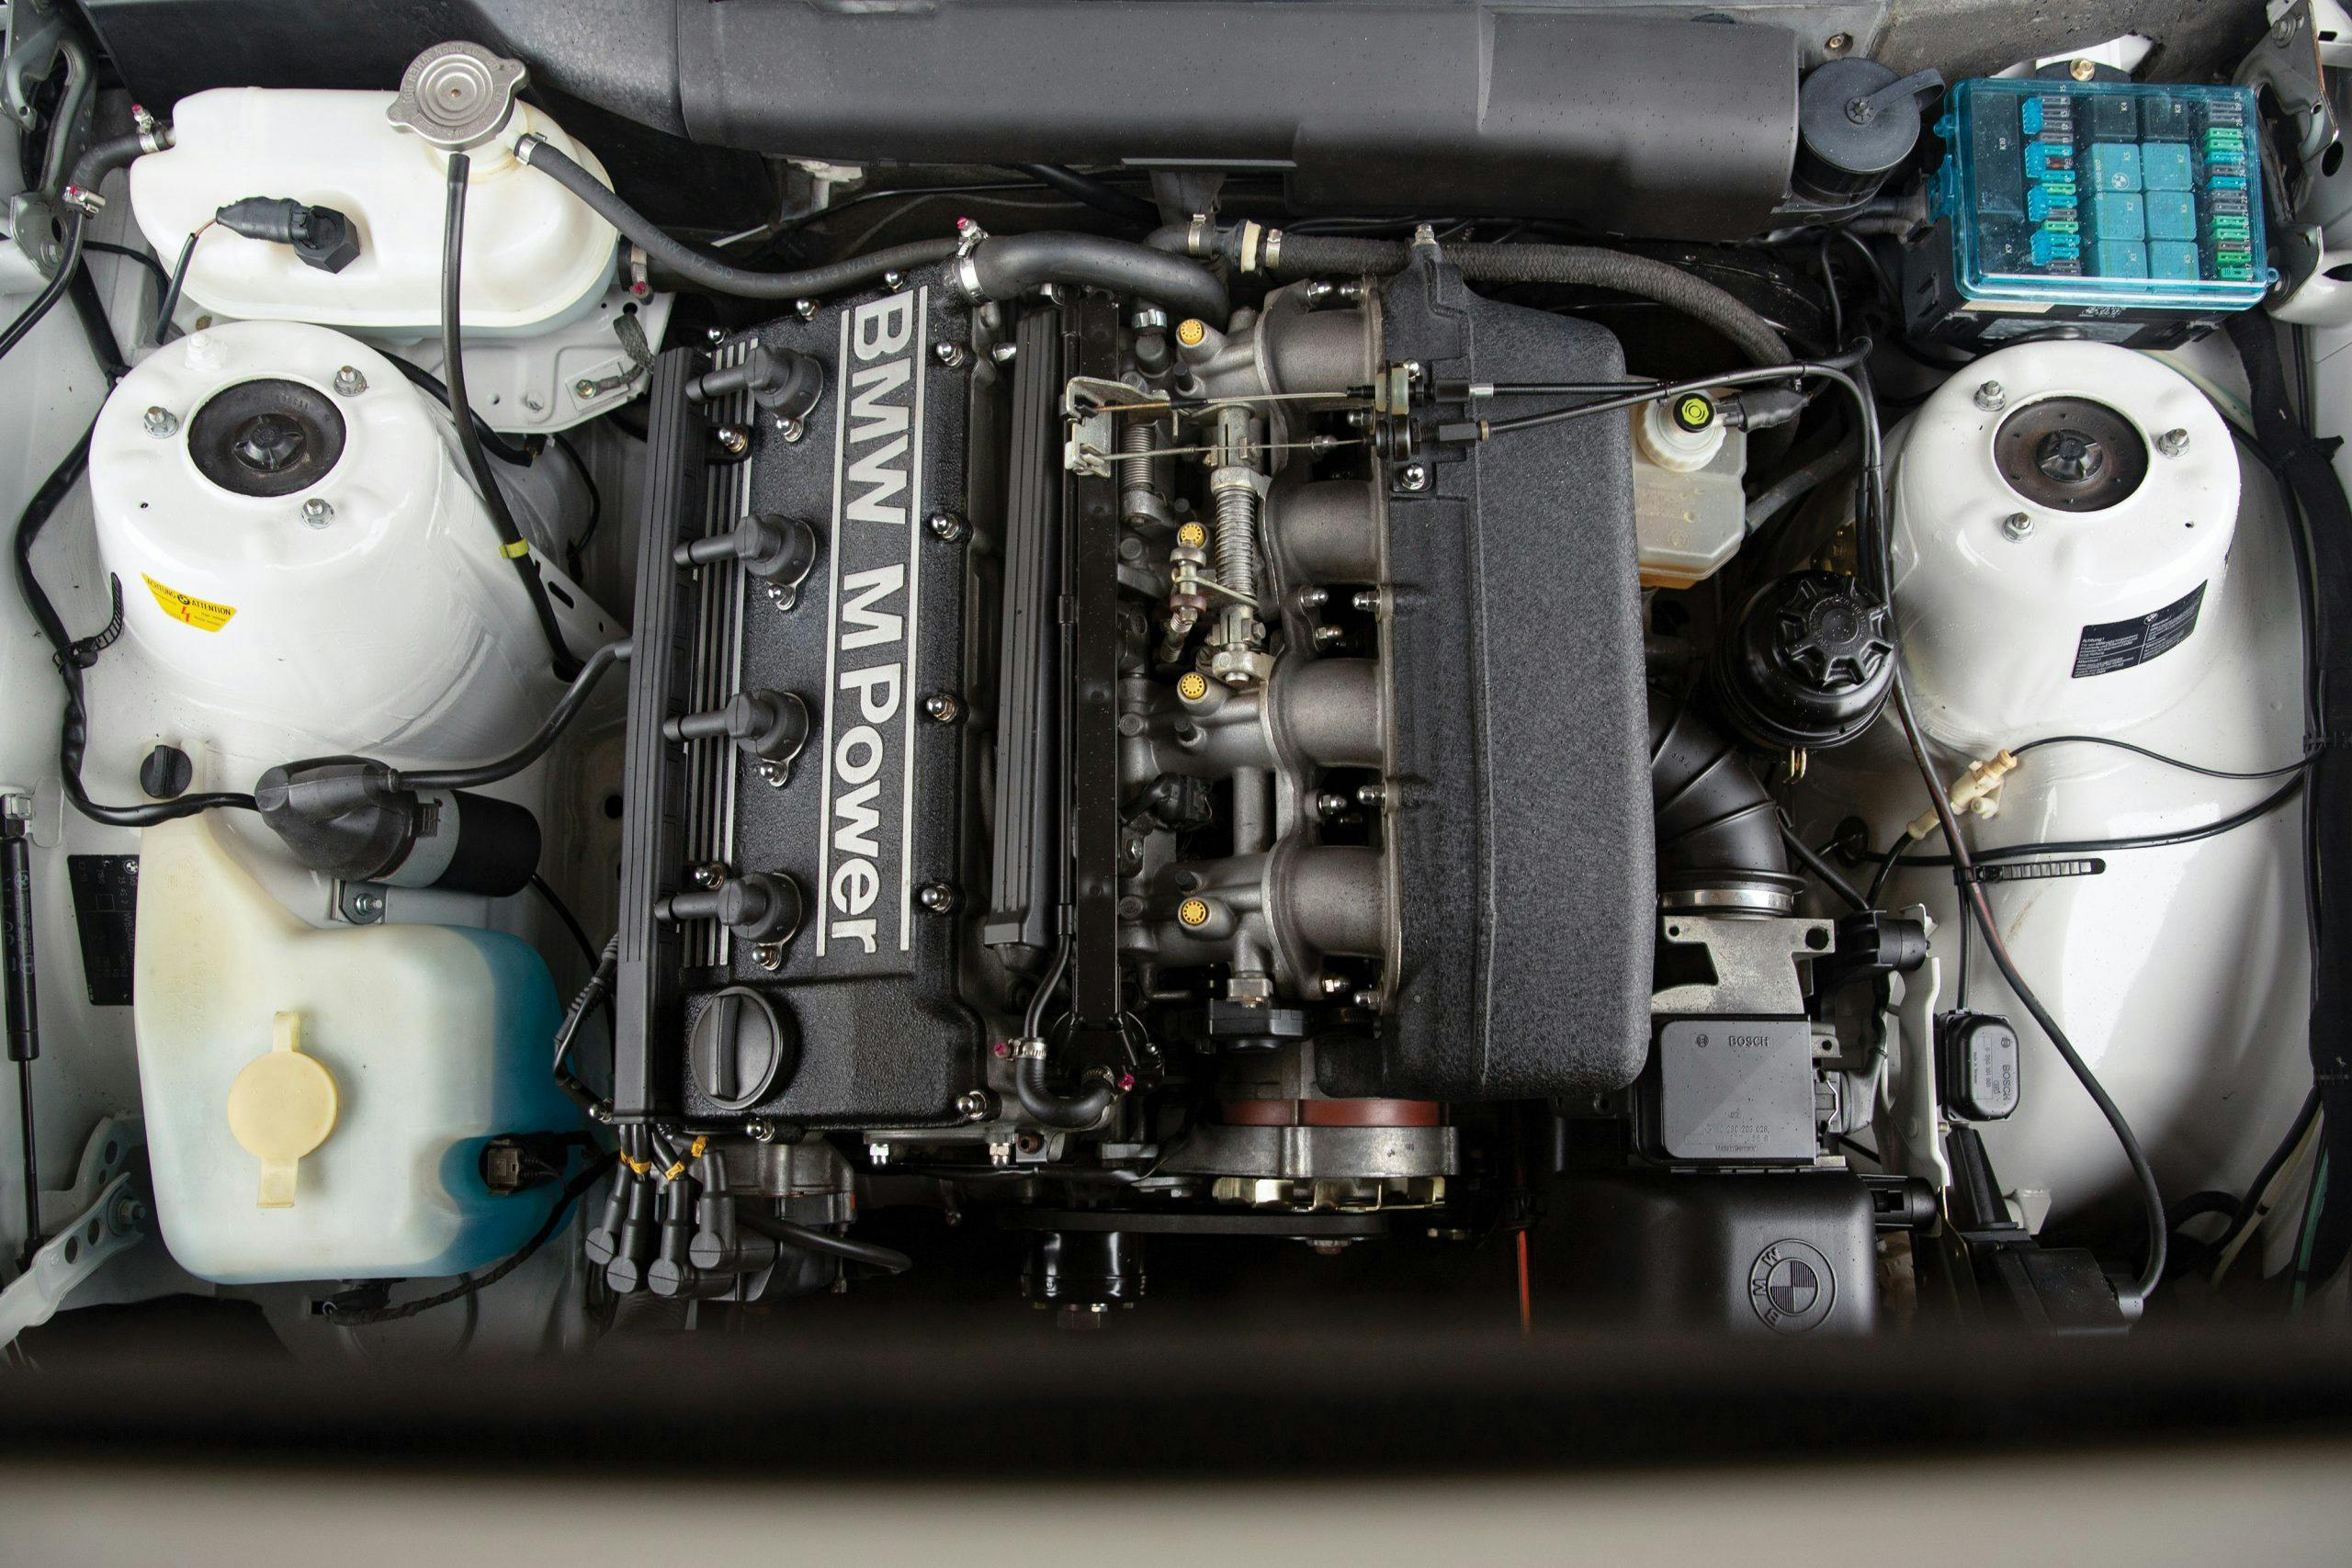 1991 BMW M3 engine